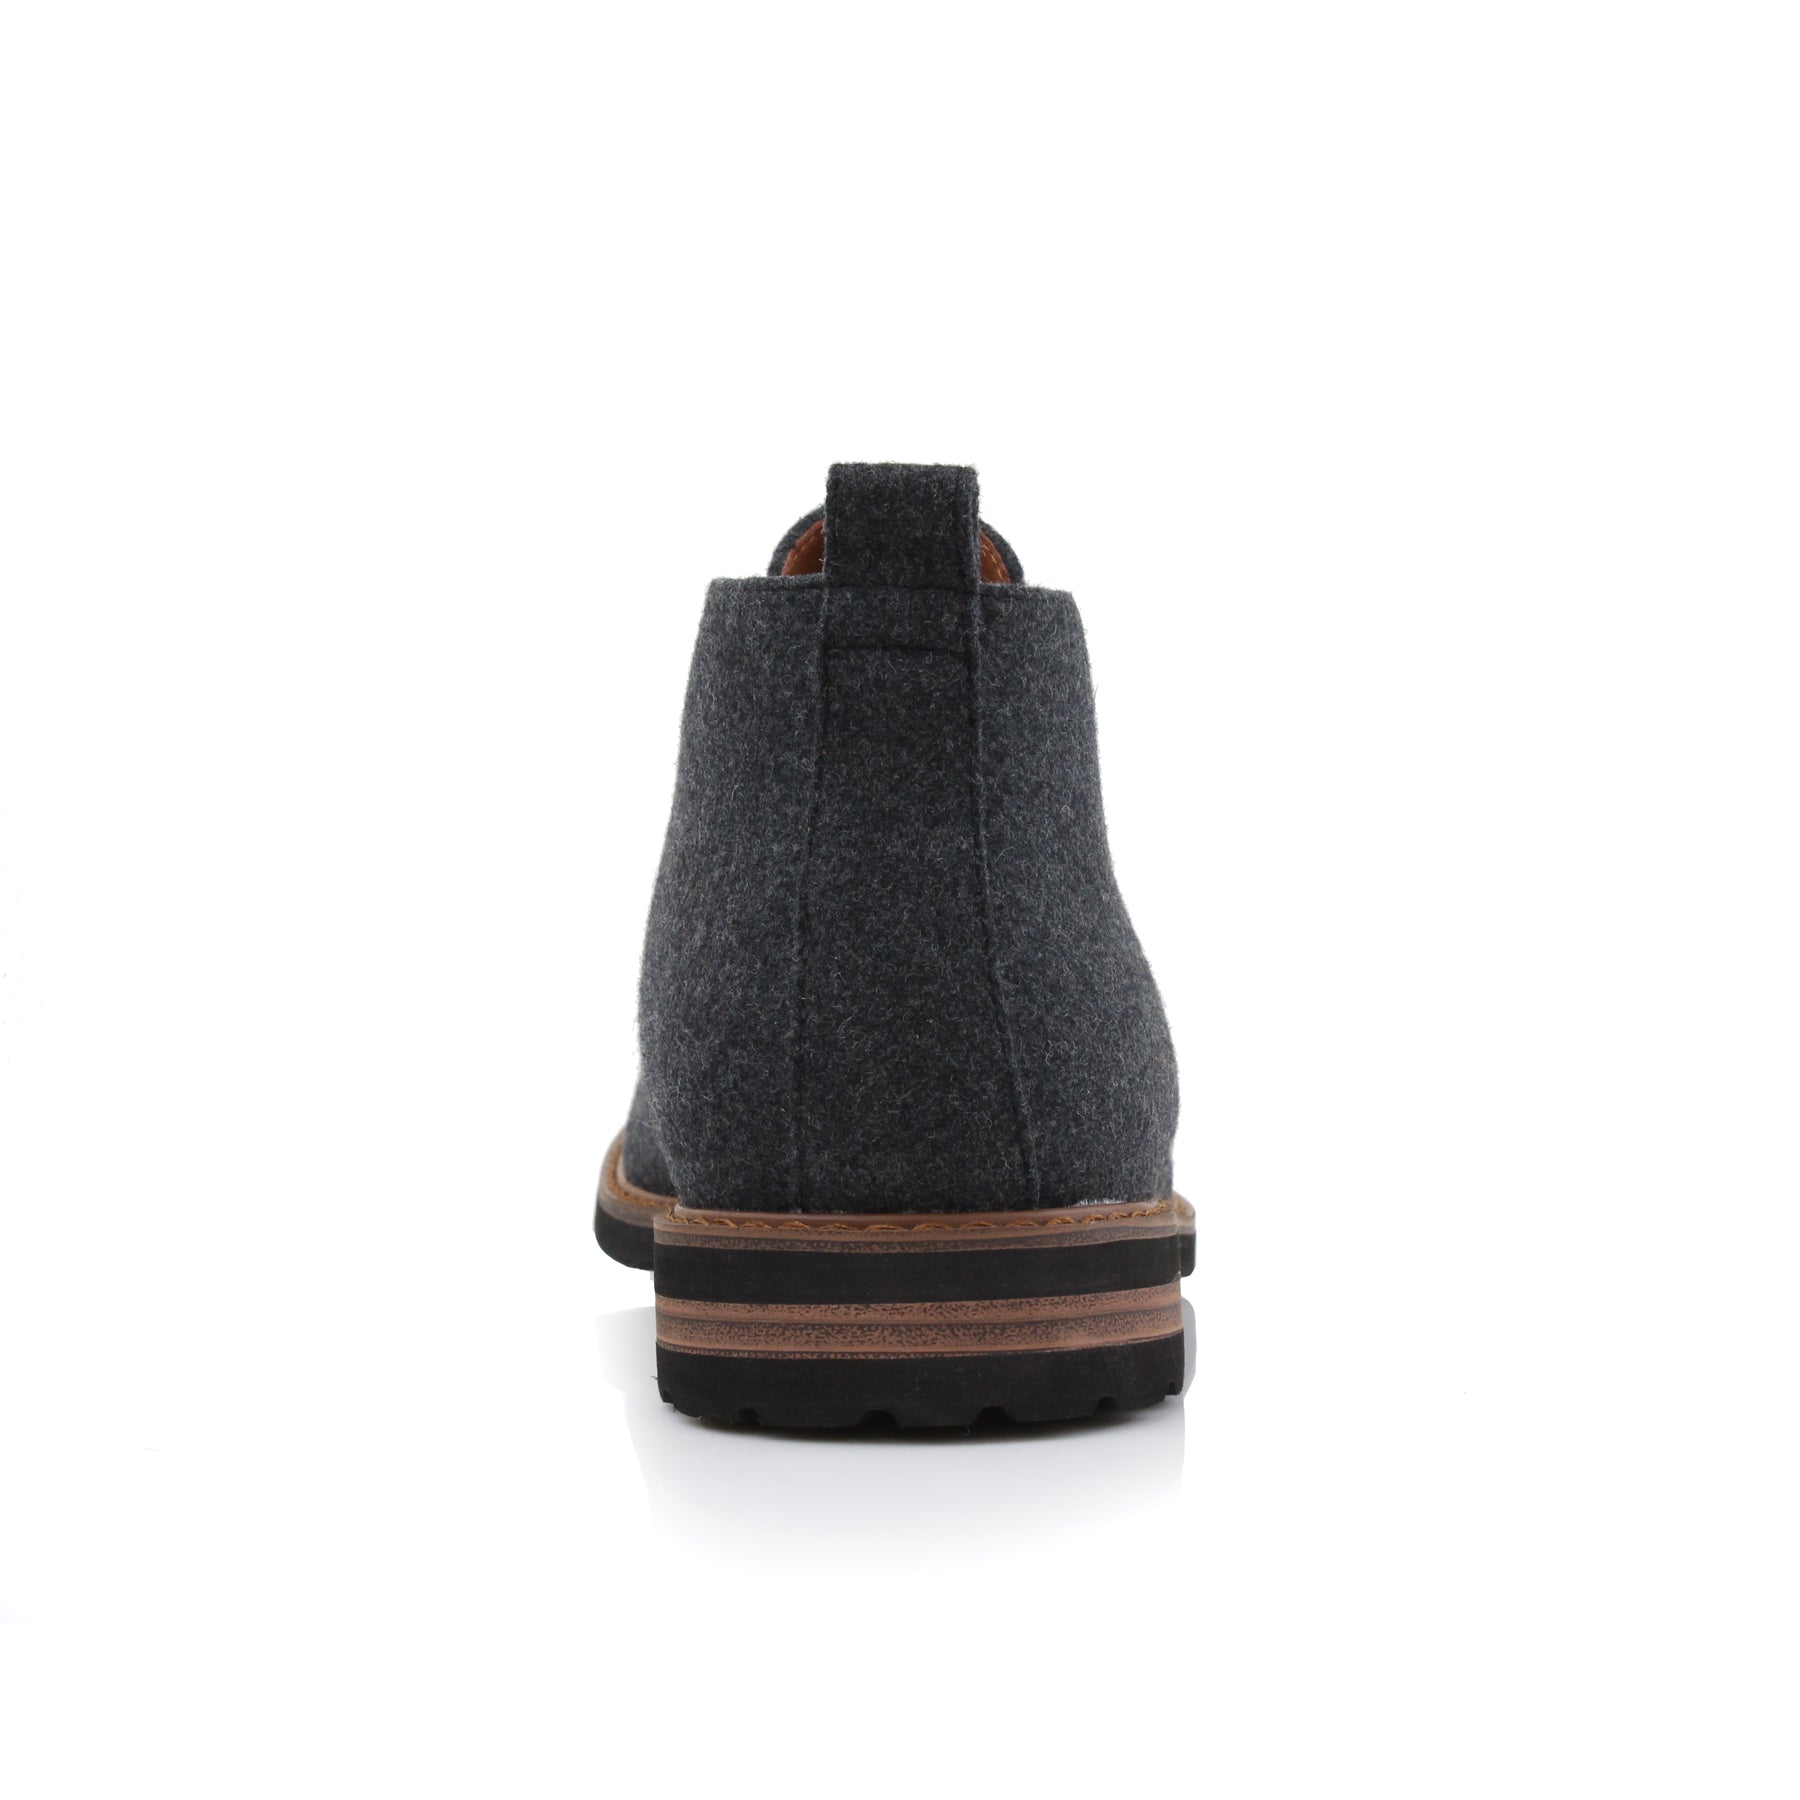 Woolen Chukka Boots | Pablo by Ferro Aldo | Conal Footwear | Back Angle View